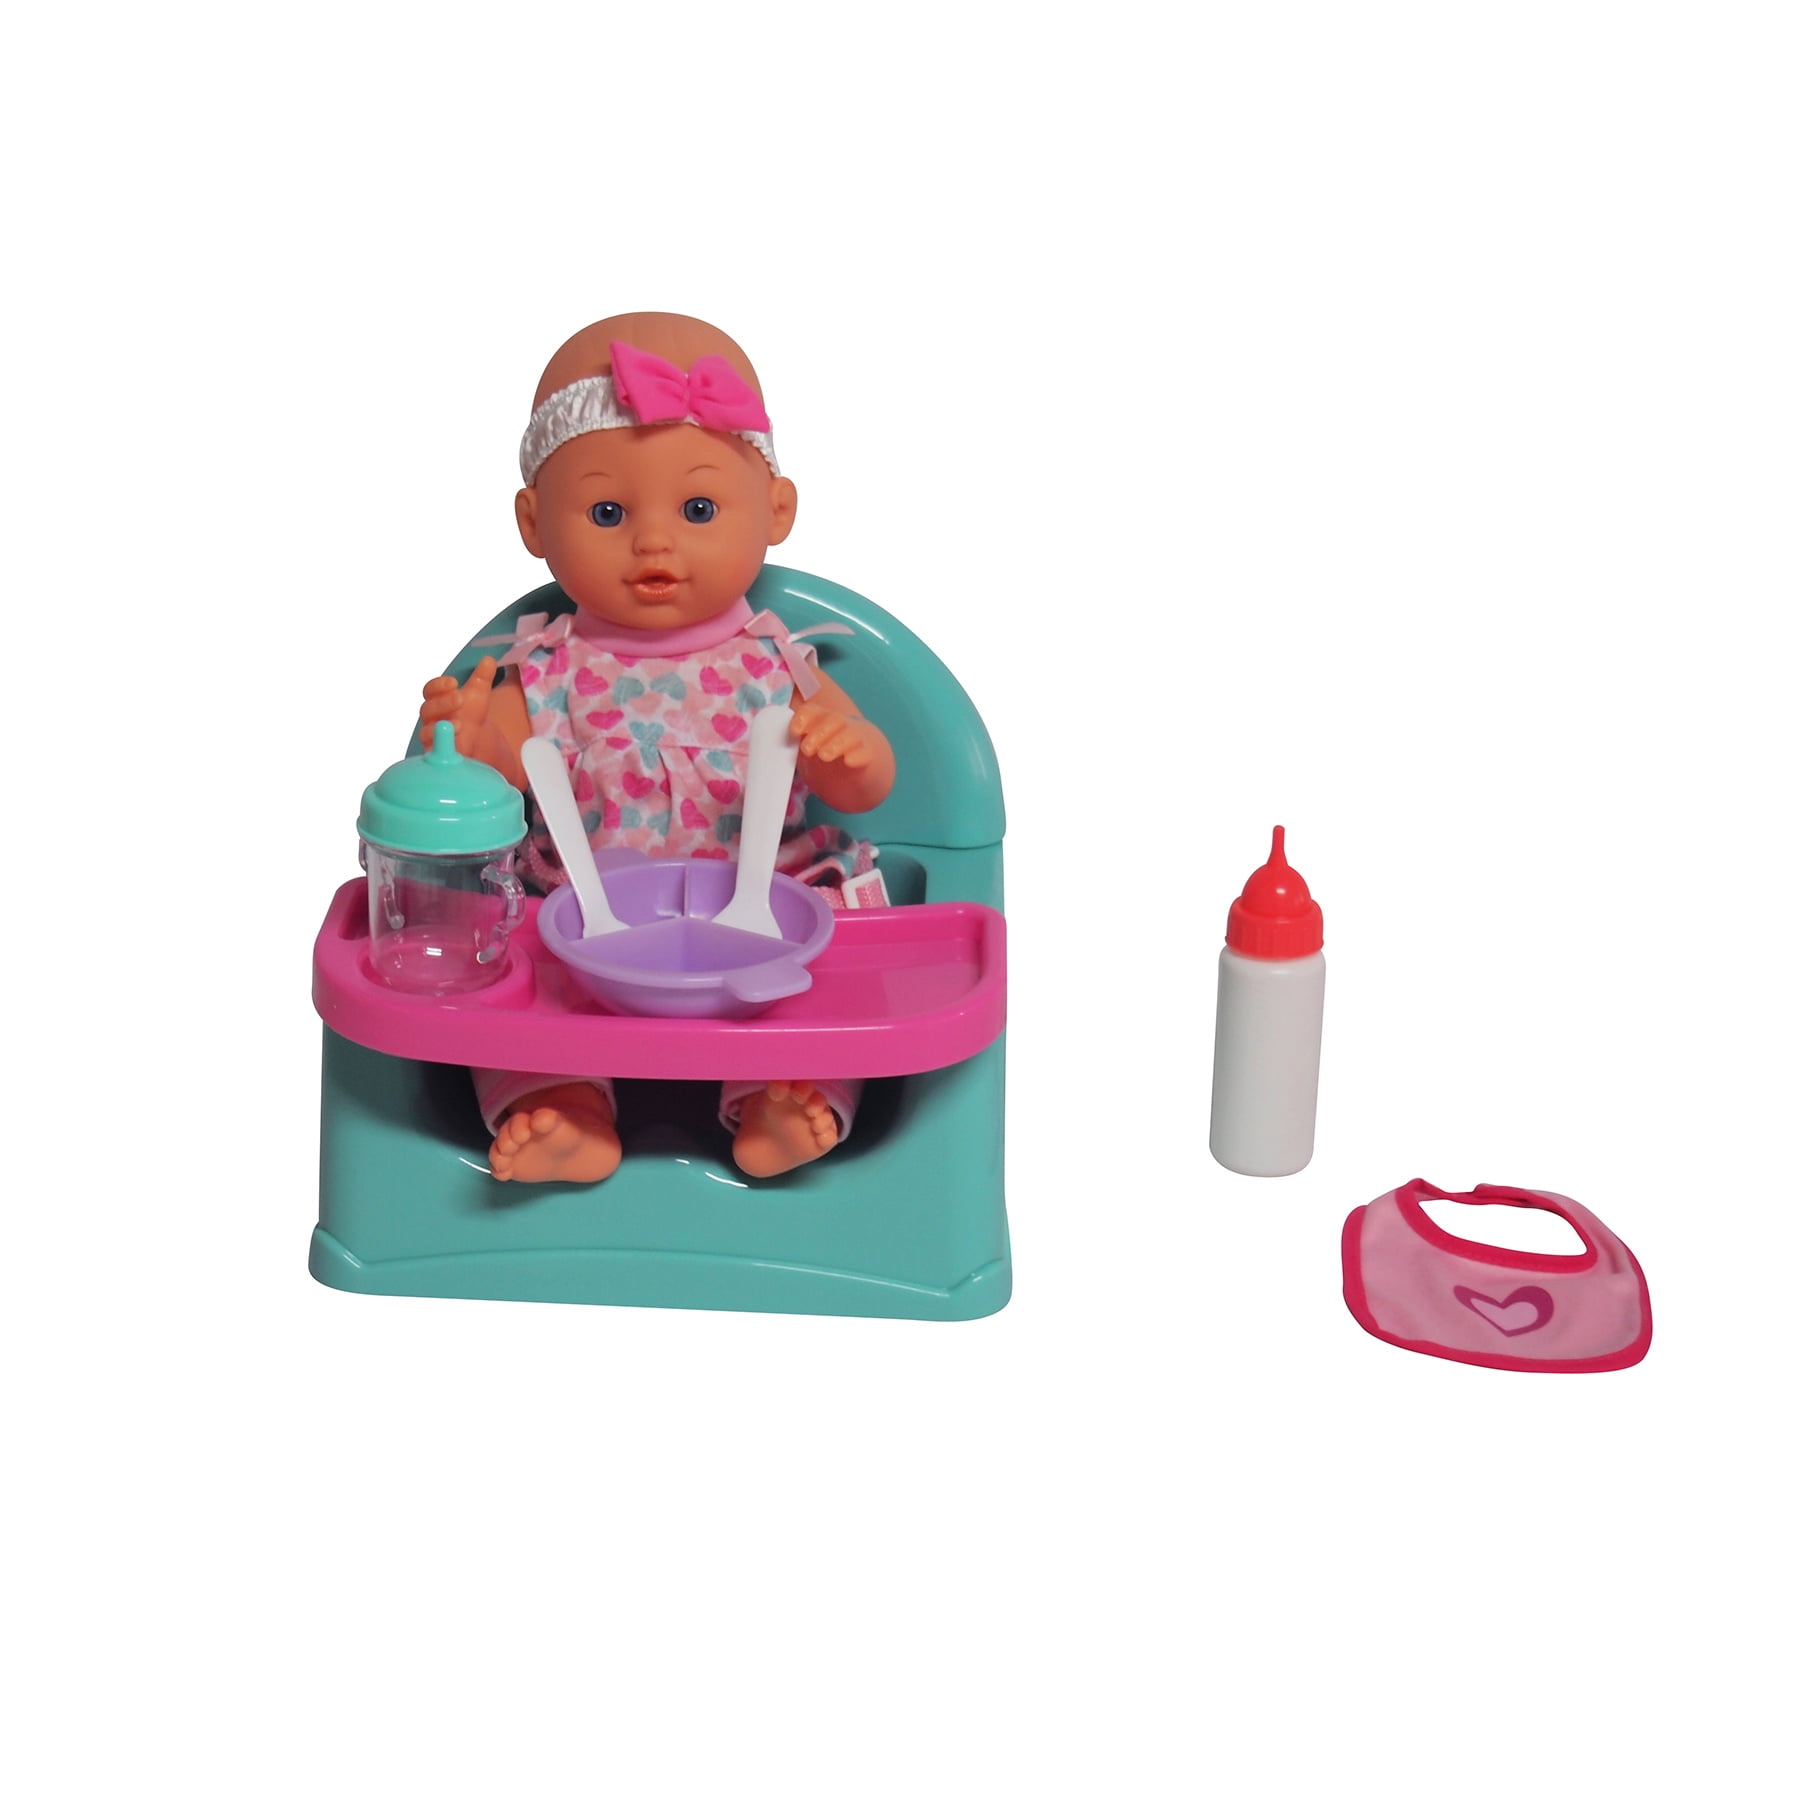 NEW PK Baby Doll Gift Toy Soft Vinyl Play set w Musical Potty Kids Toddler 2 